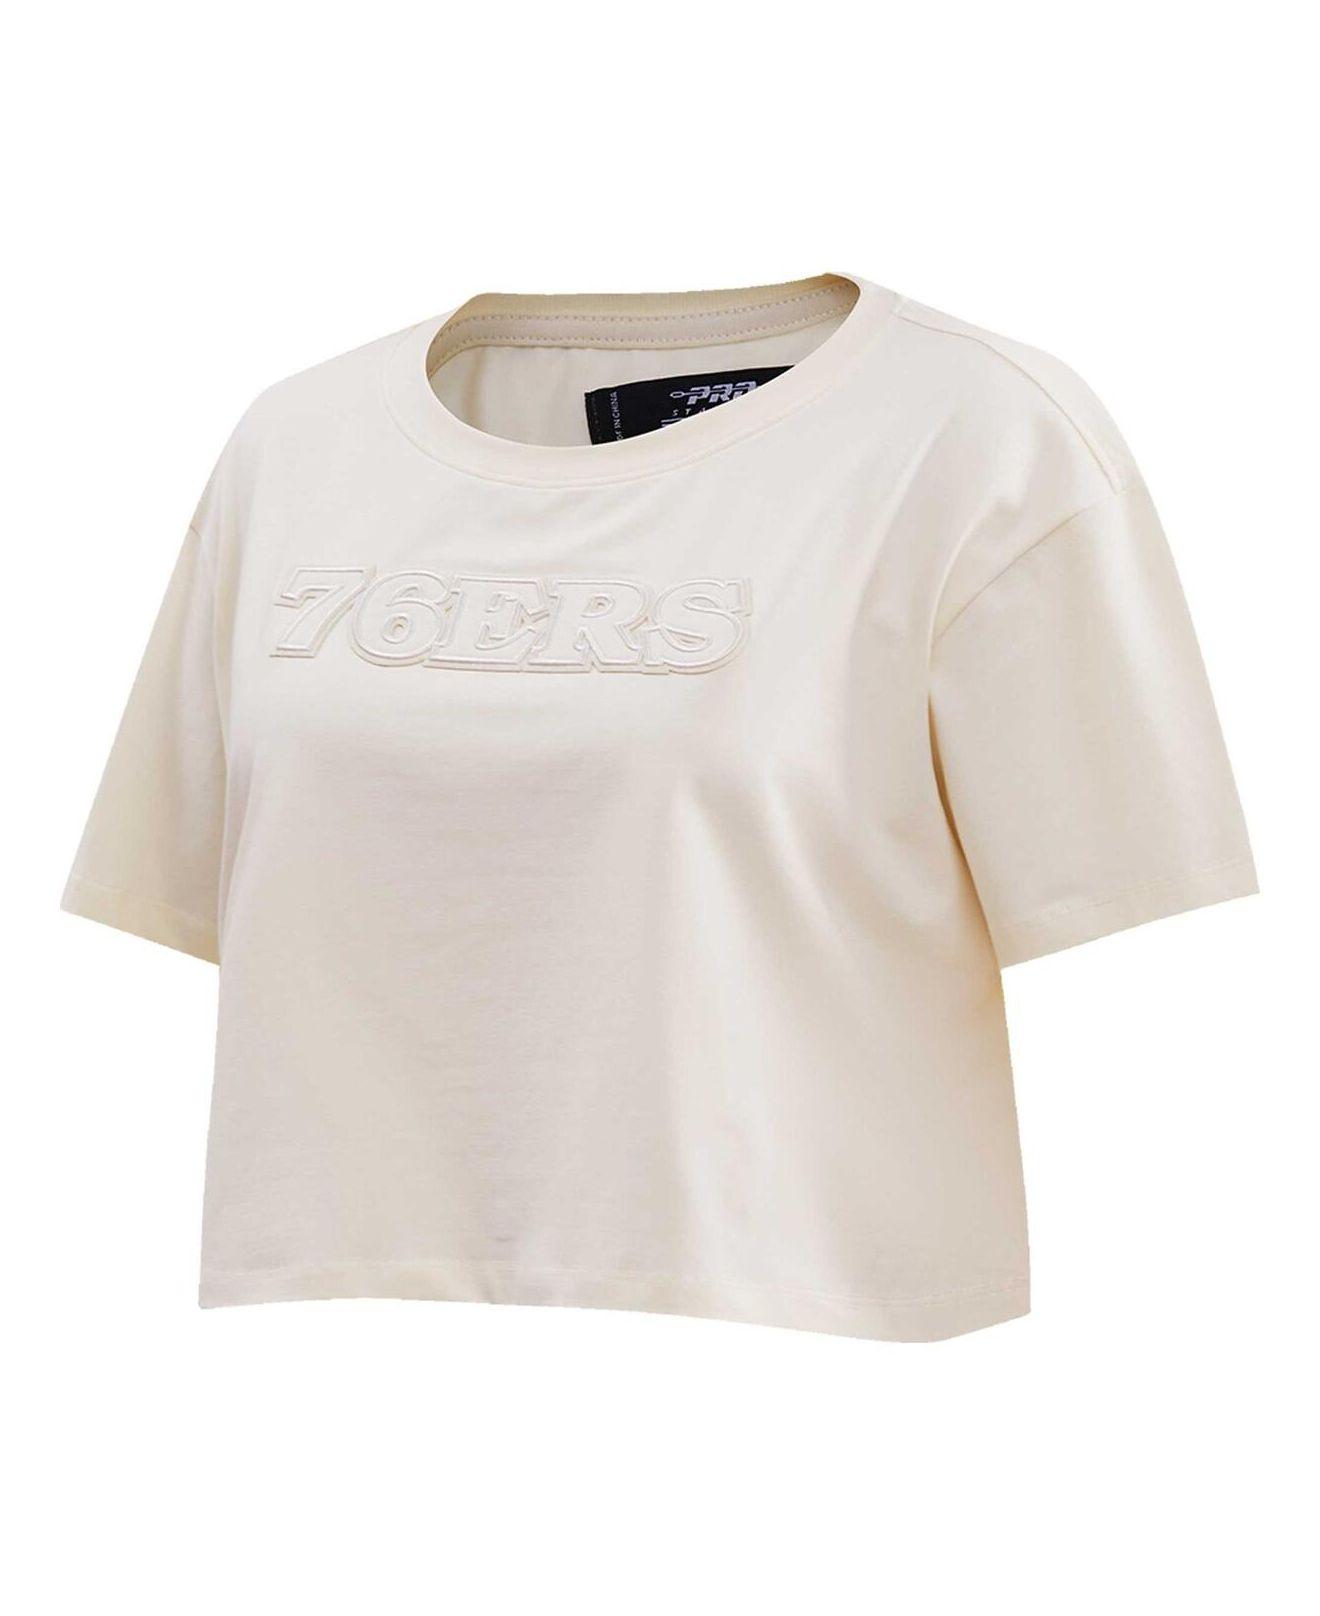 Women's Detroit Tigers Pro Standard Navy Classic Team Boxy Cropped T-Shirt